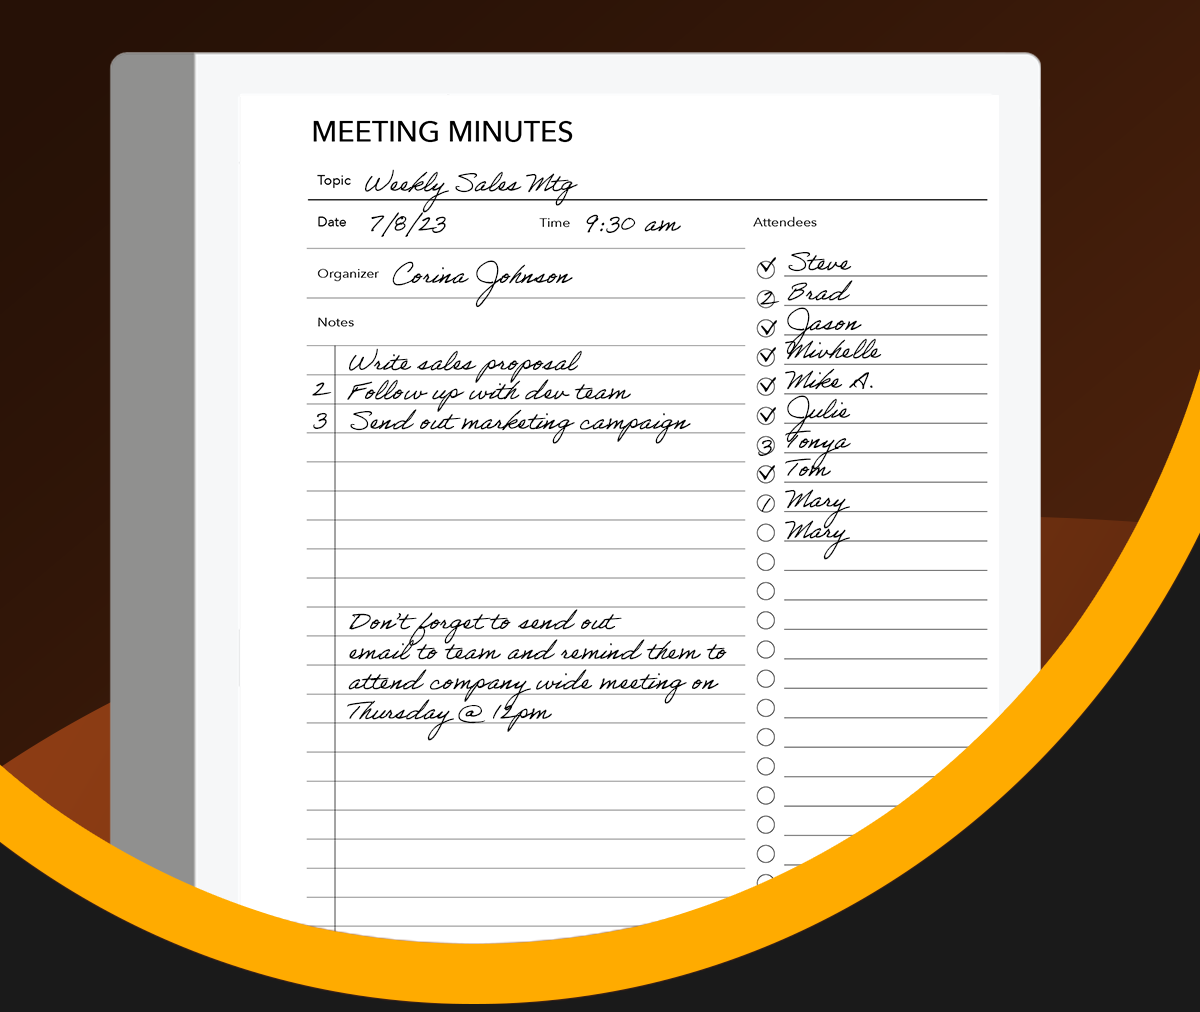 Meeting Minutes - Tasks & Attendees - Einkpads - reMarkable Templates